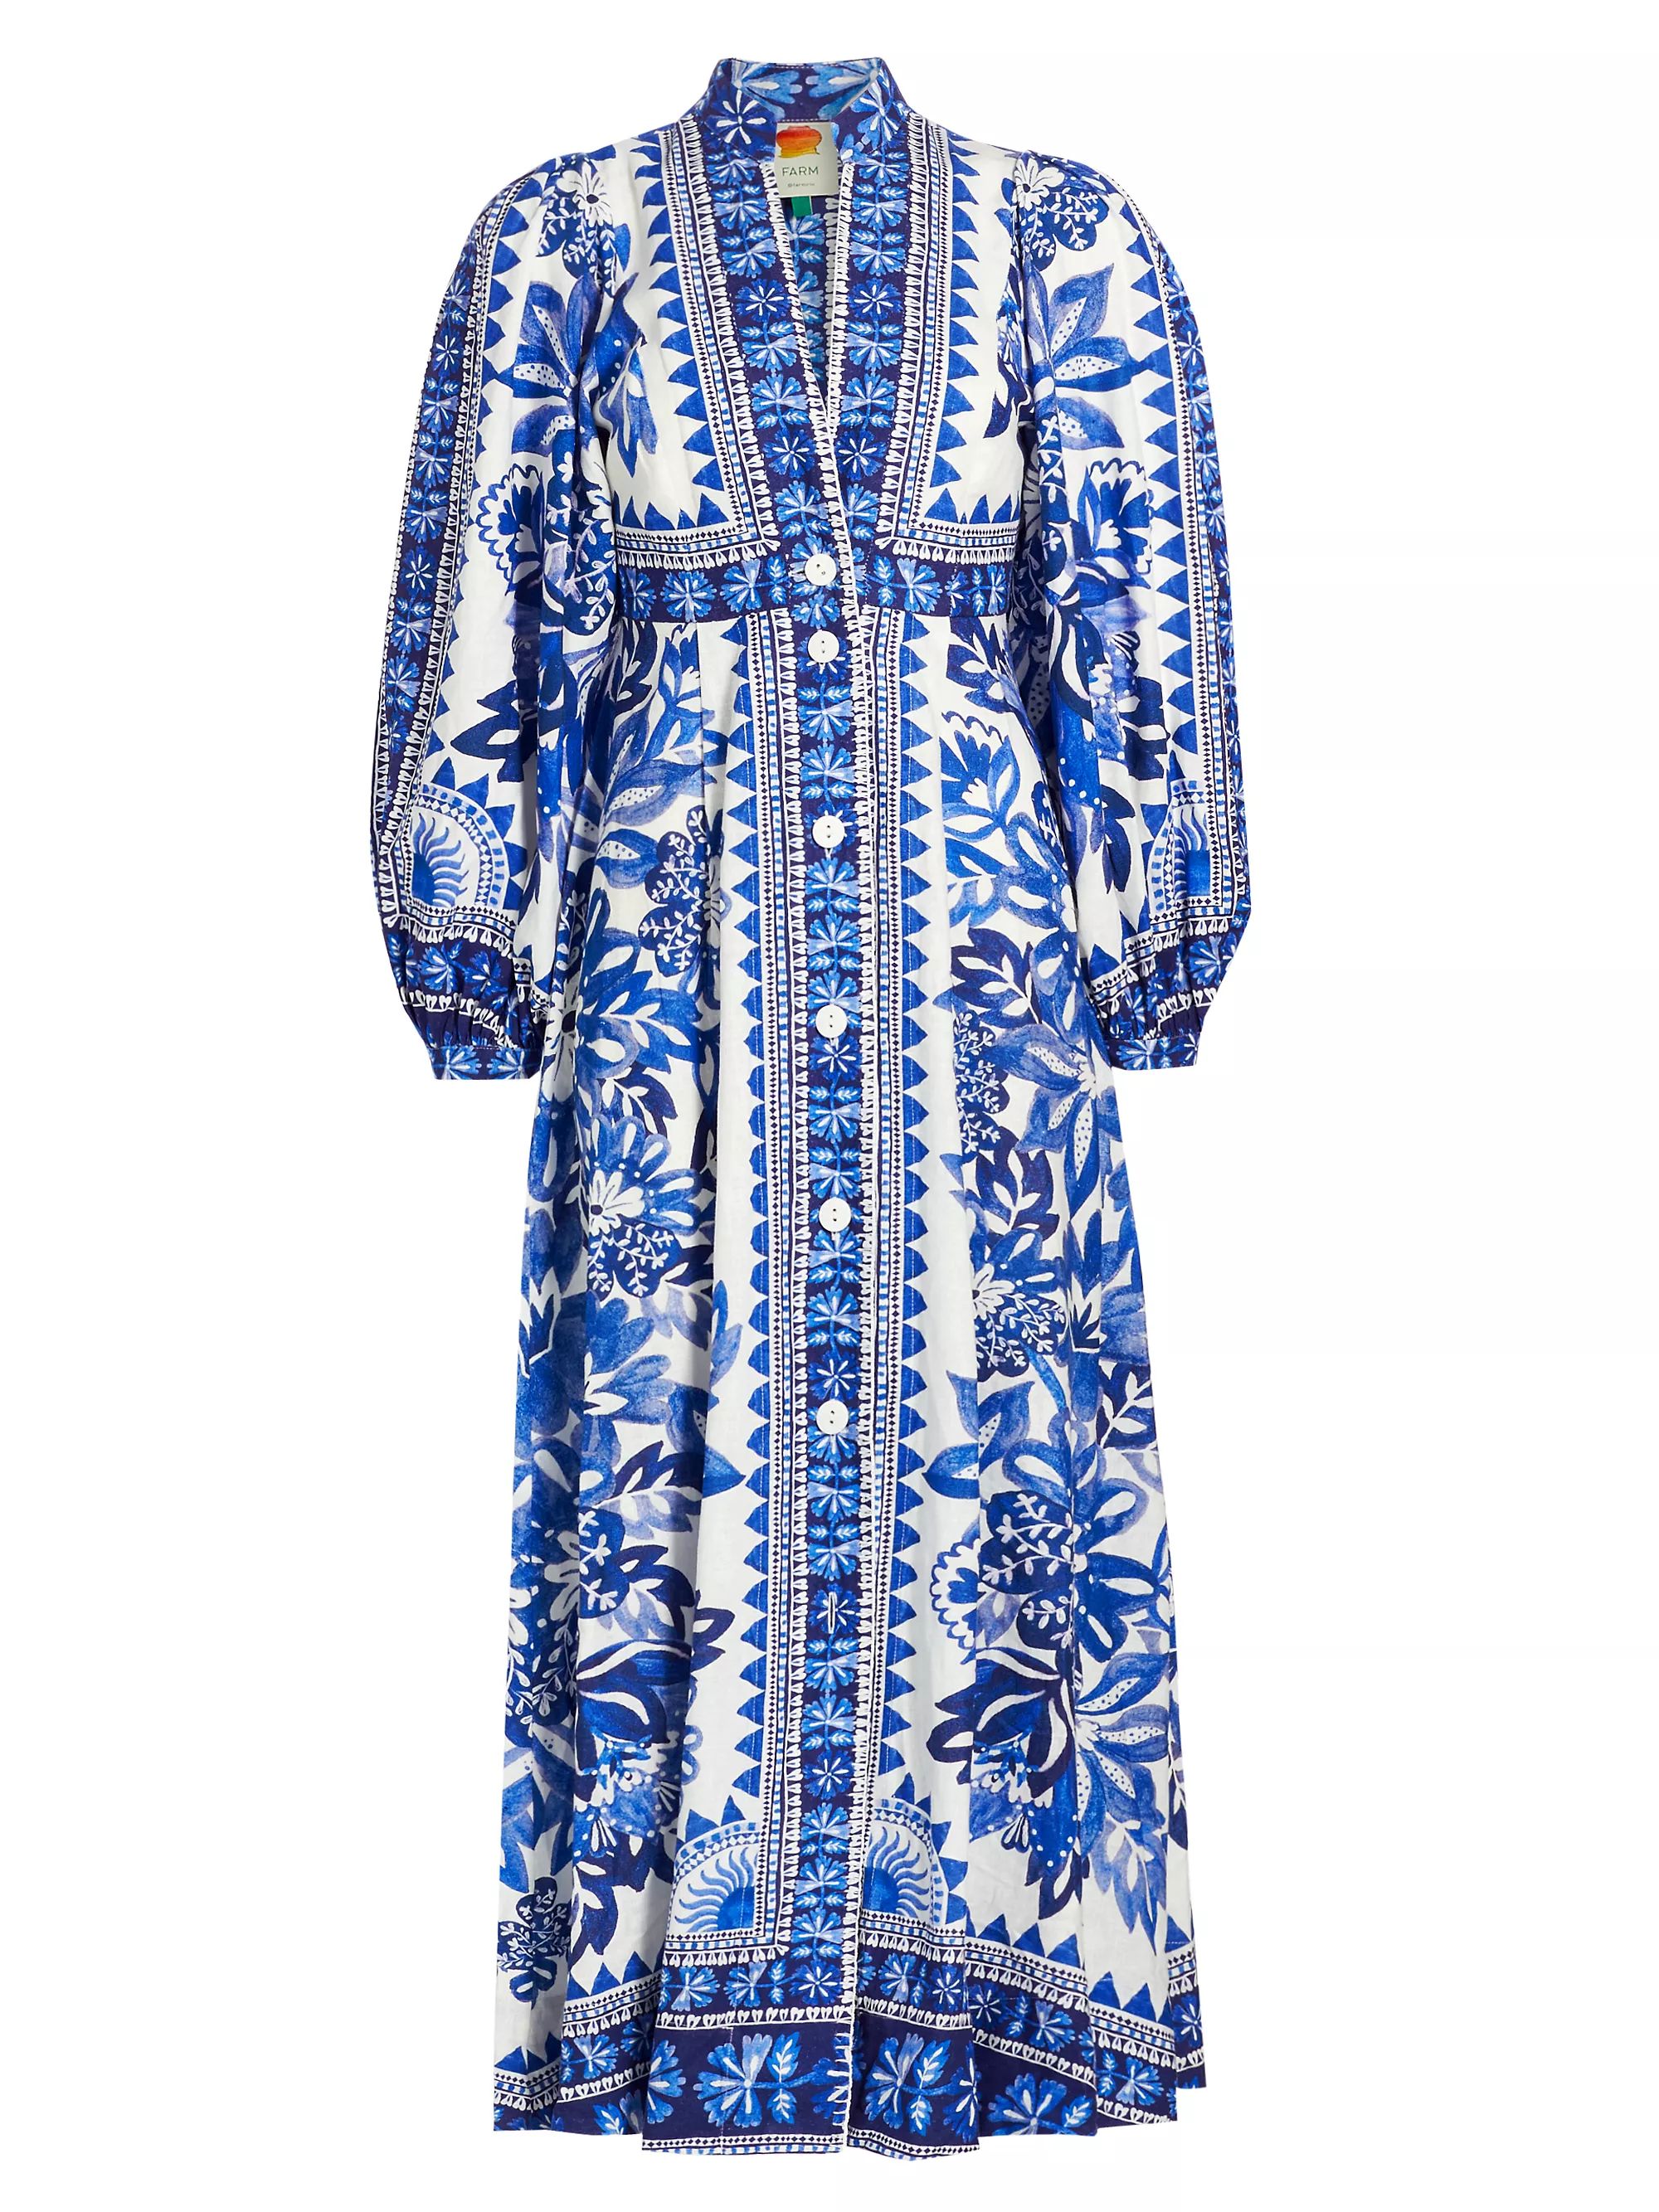 Flora Tape Stry Off WhiteAll MaxiFarm RioFlora Tapestry Maxi Dress$315
            
          SEL... | Saks Fifth Avenue